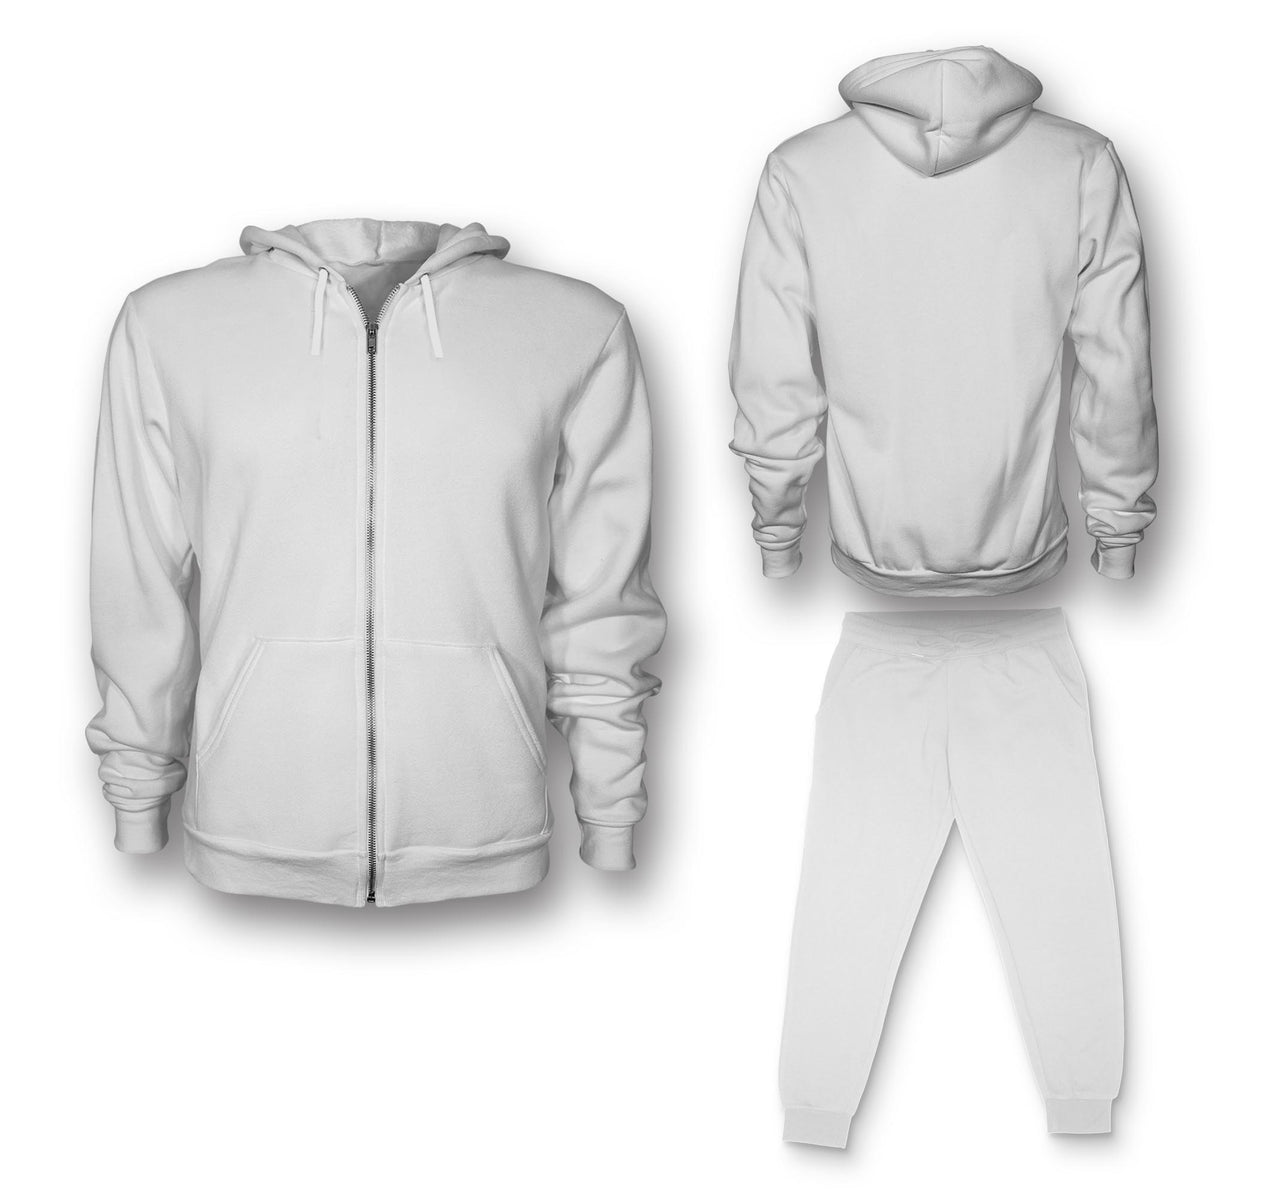 NO Design Super Quality Zipped Hoodies & Sweatpants Set